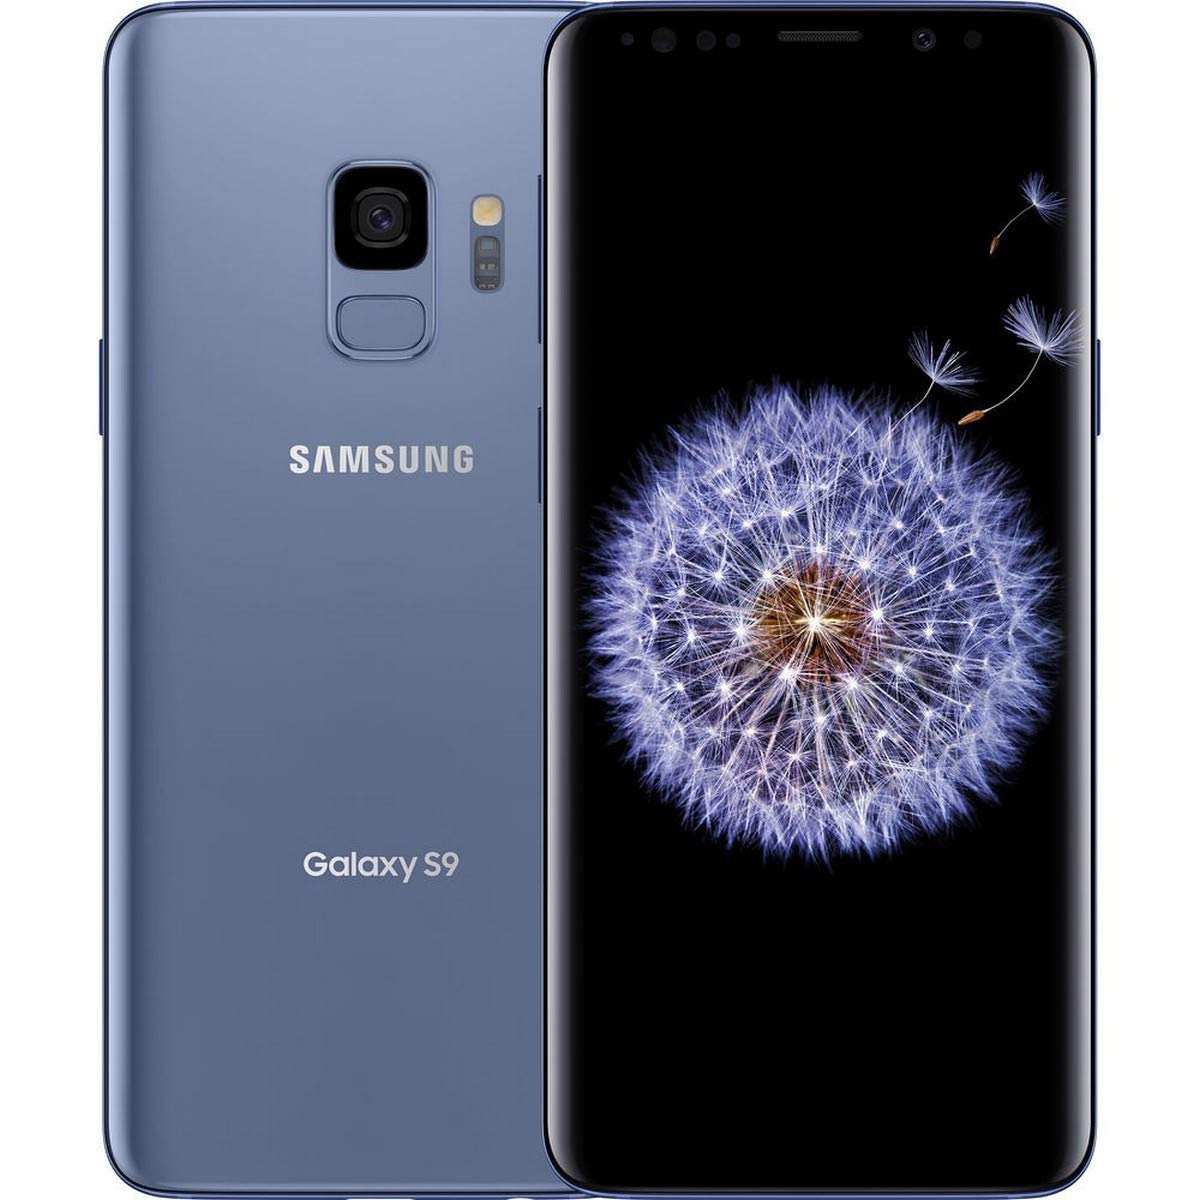 Samsung Galaxy S9 (SM-G960F/DS) 4GB / 64GB 5.8-inches LTE Dual SIM Factory Unlocked - International Stock No Warranty (Titanium Gray)